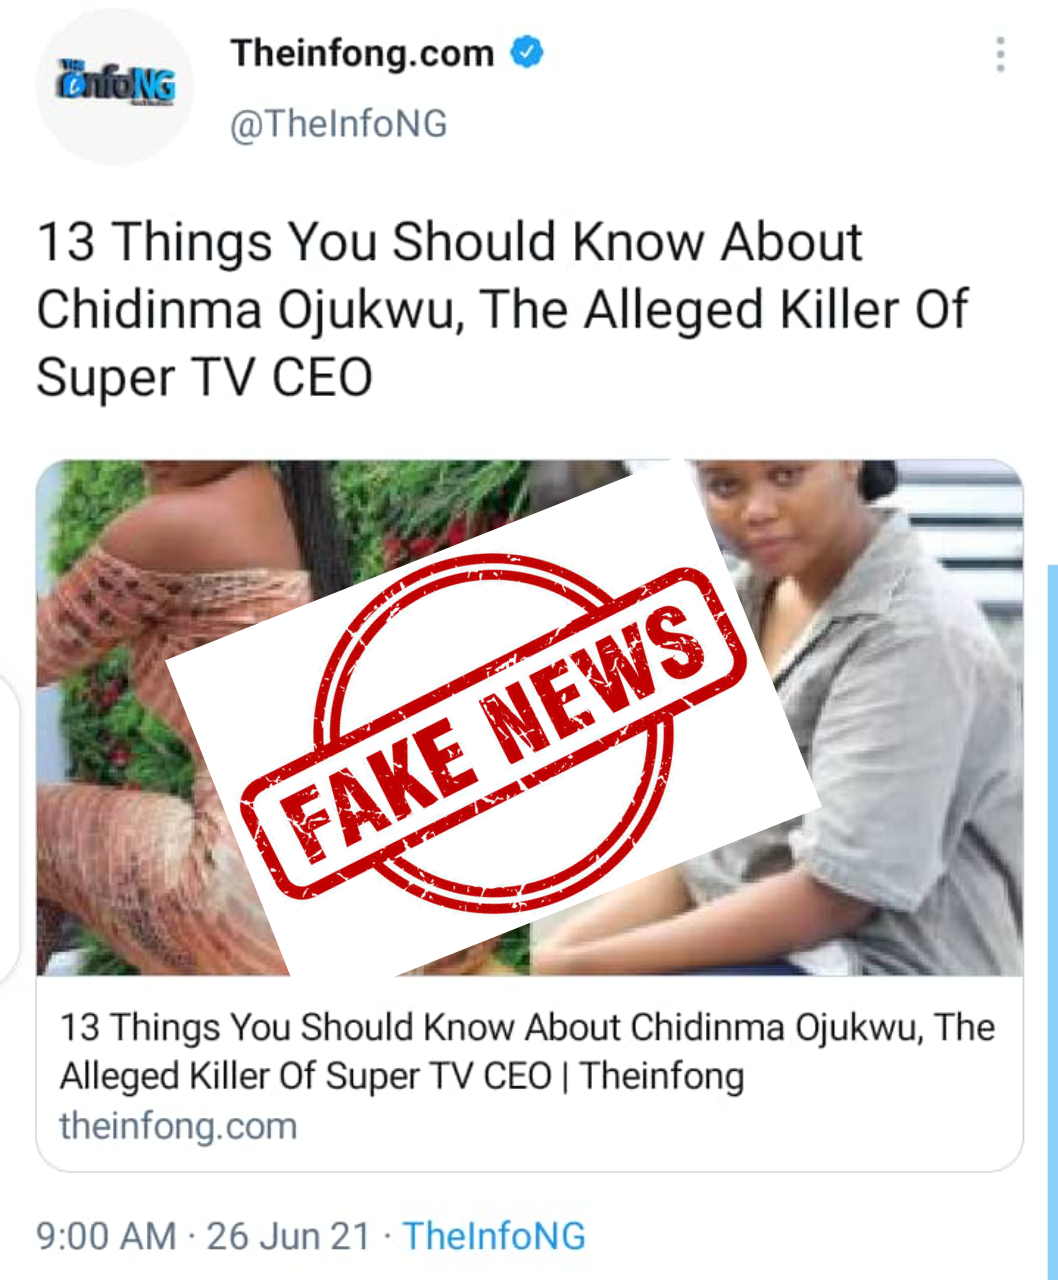 Fake news, not Chidinma